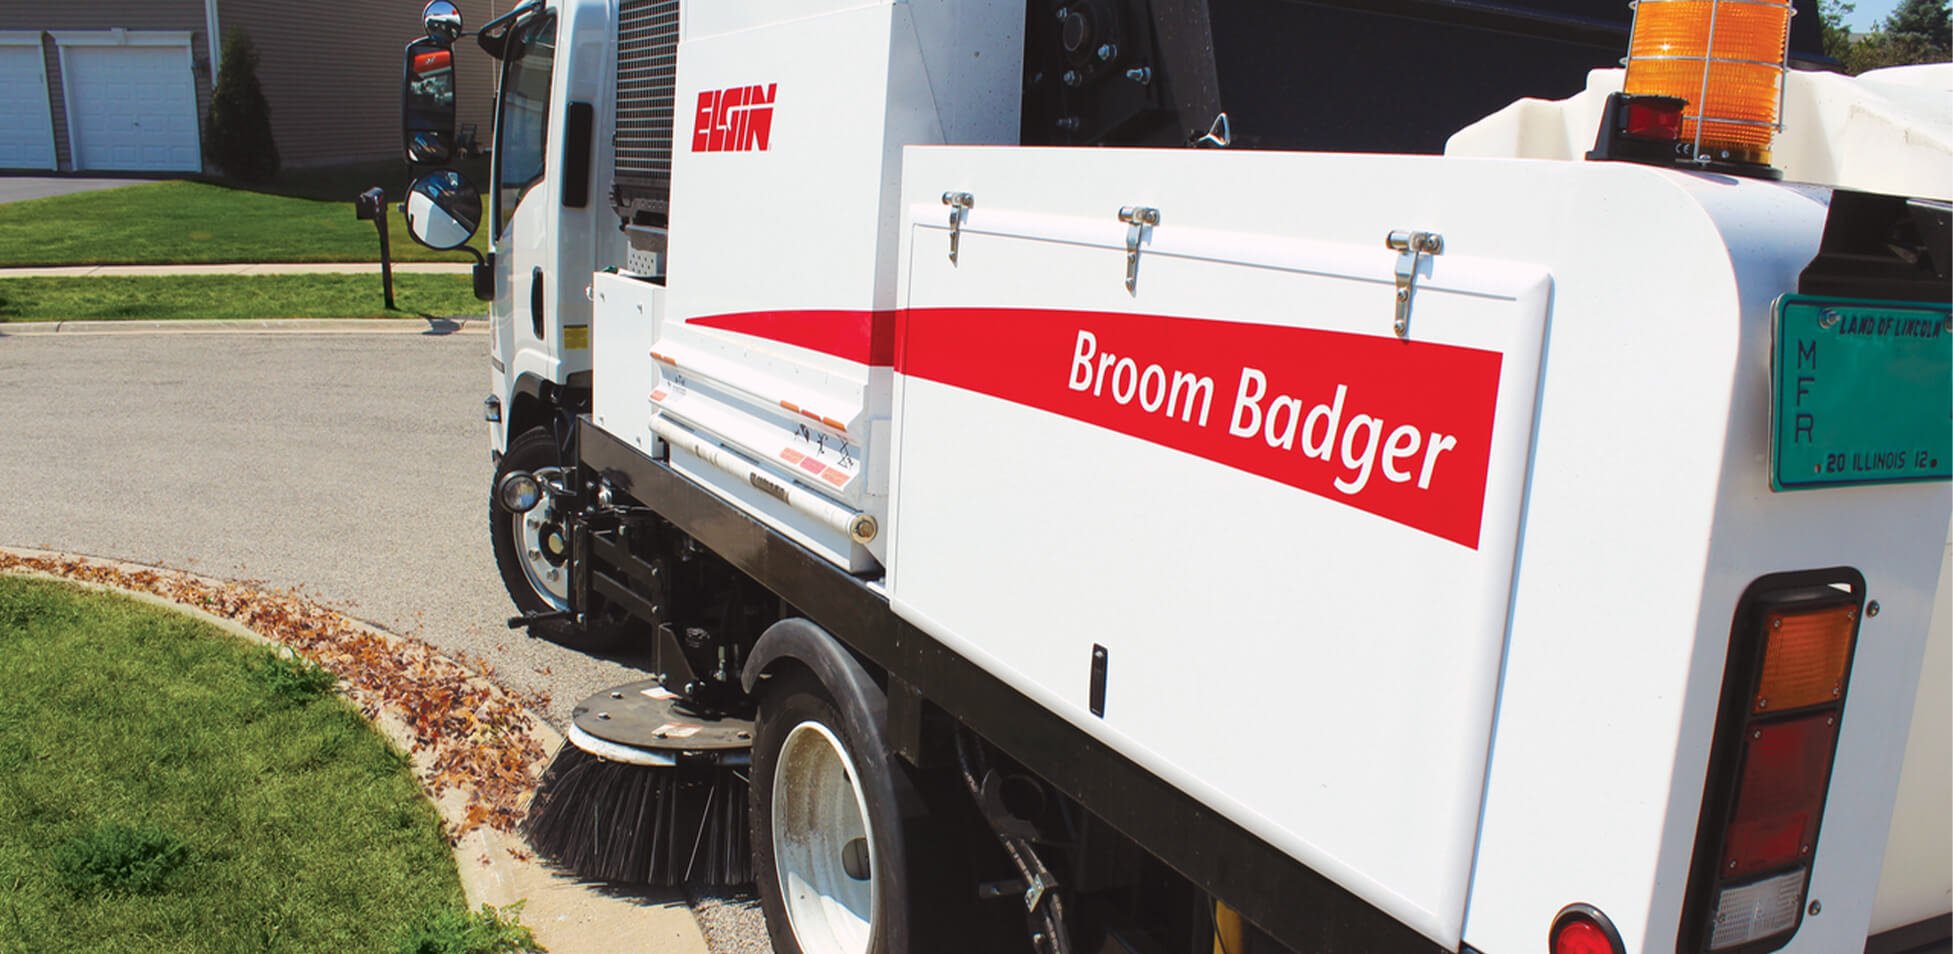 Elgin to Manufacture Broom Badger in 2022